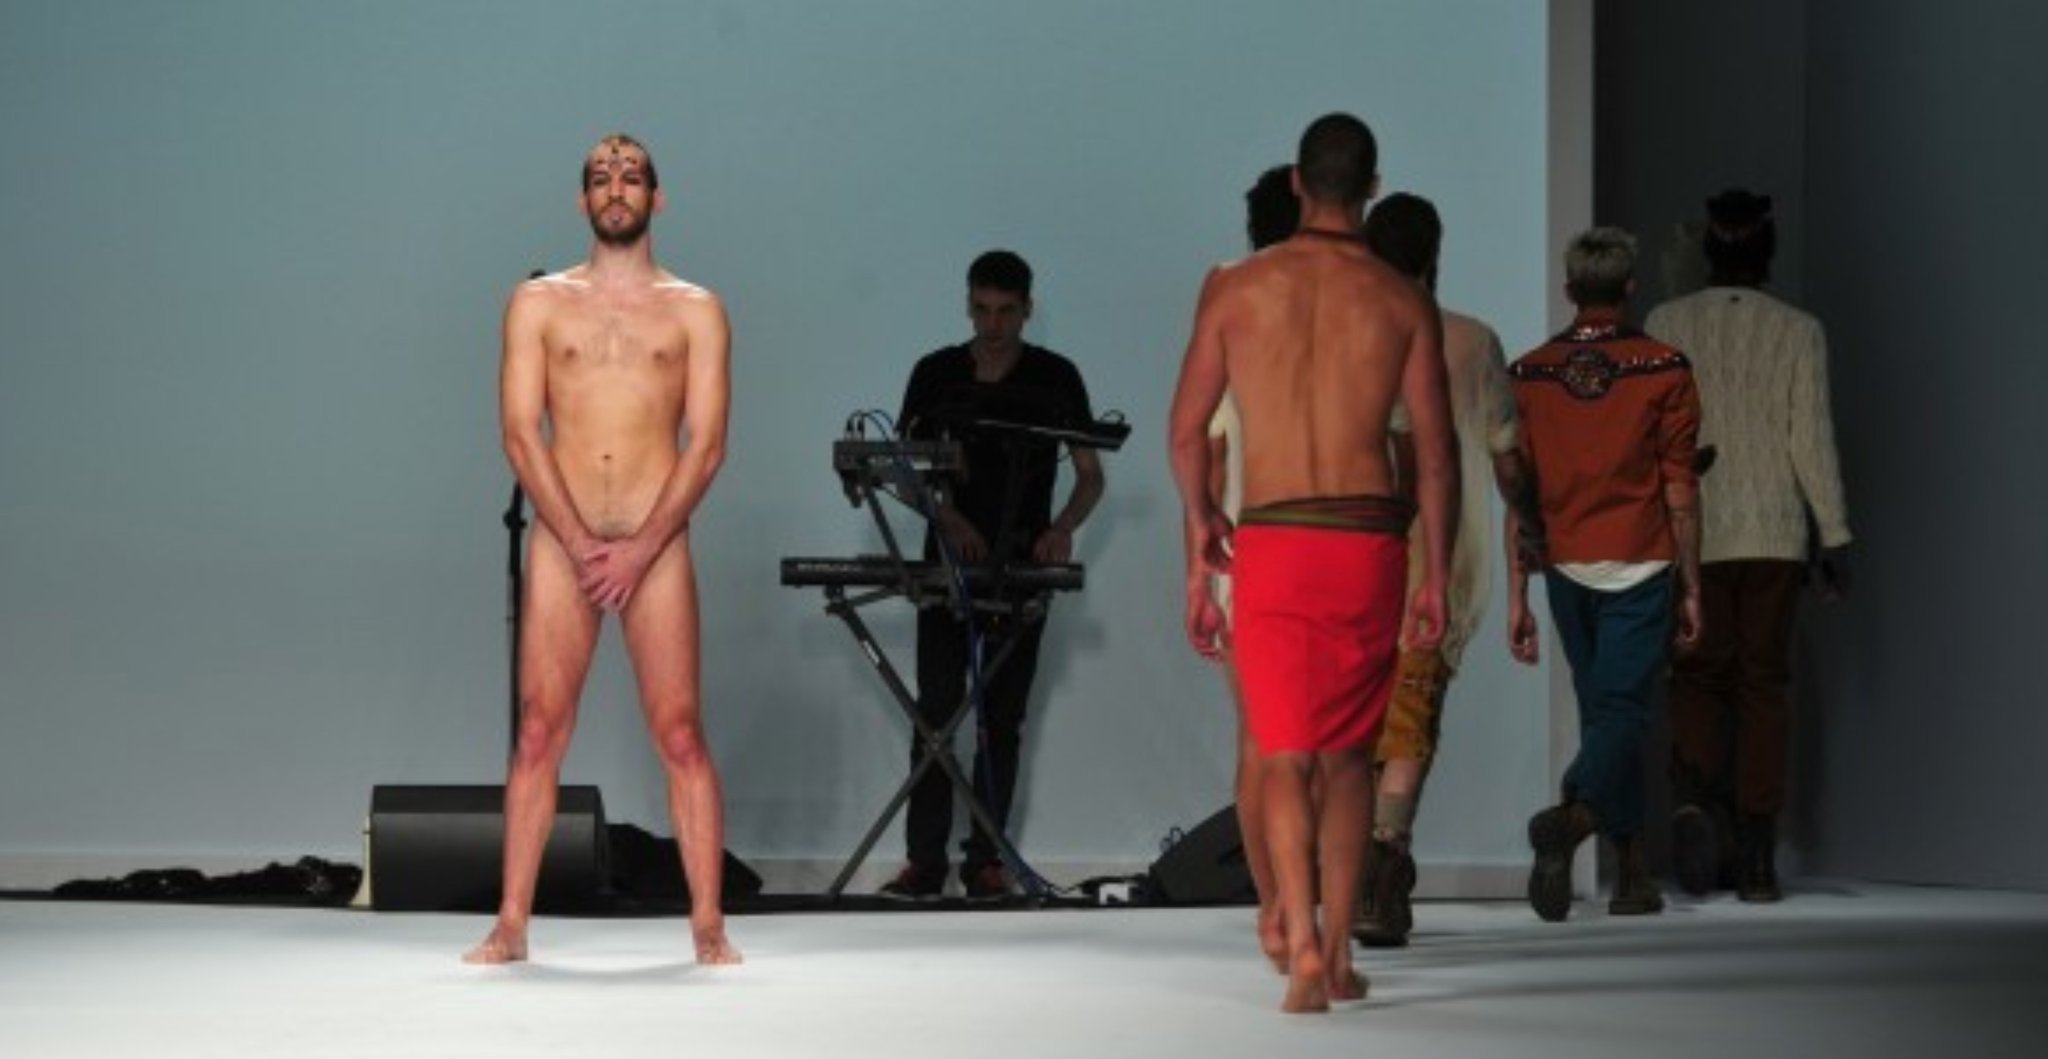 реклама сумок голыми мужиками фото 63